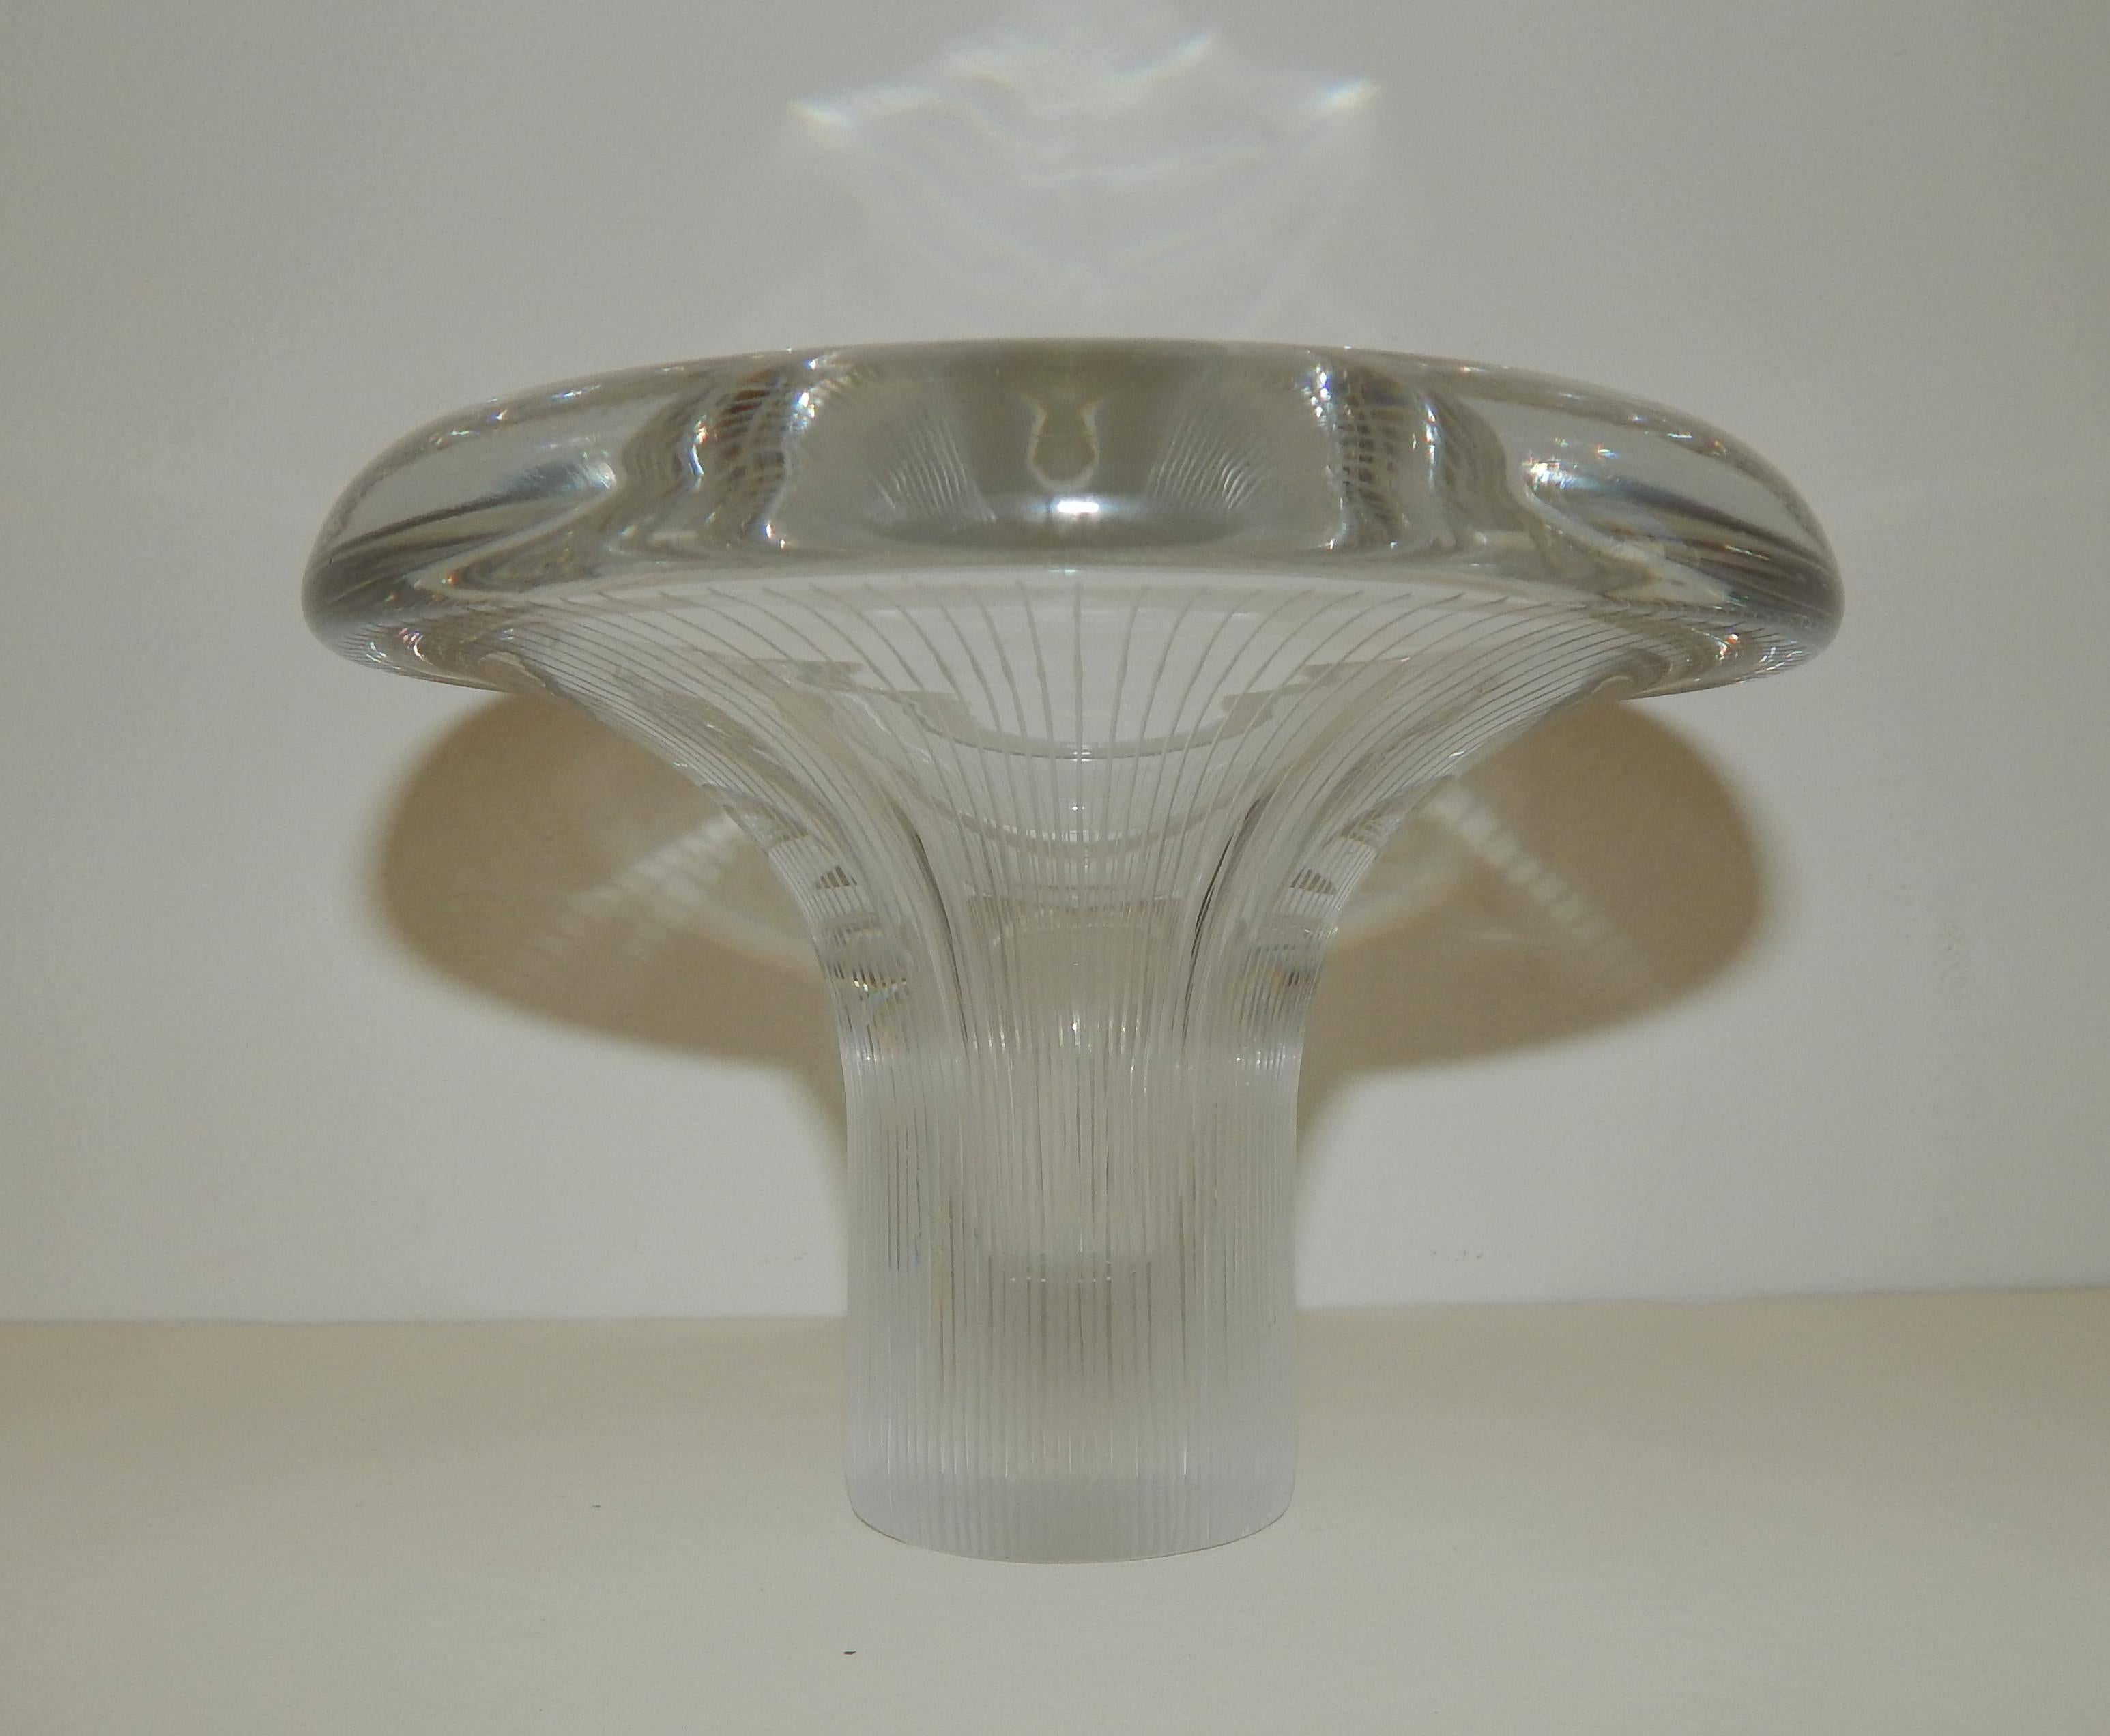 
Mushroom shaped crystal, line cut-glass. circa, 1950s.
Etched signature to base: Tapio Wirkkala litalla ‘56.
Measures: 3.75